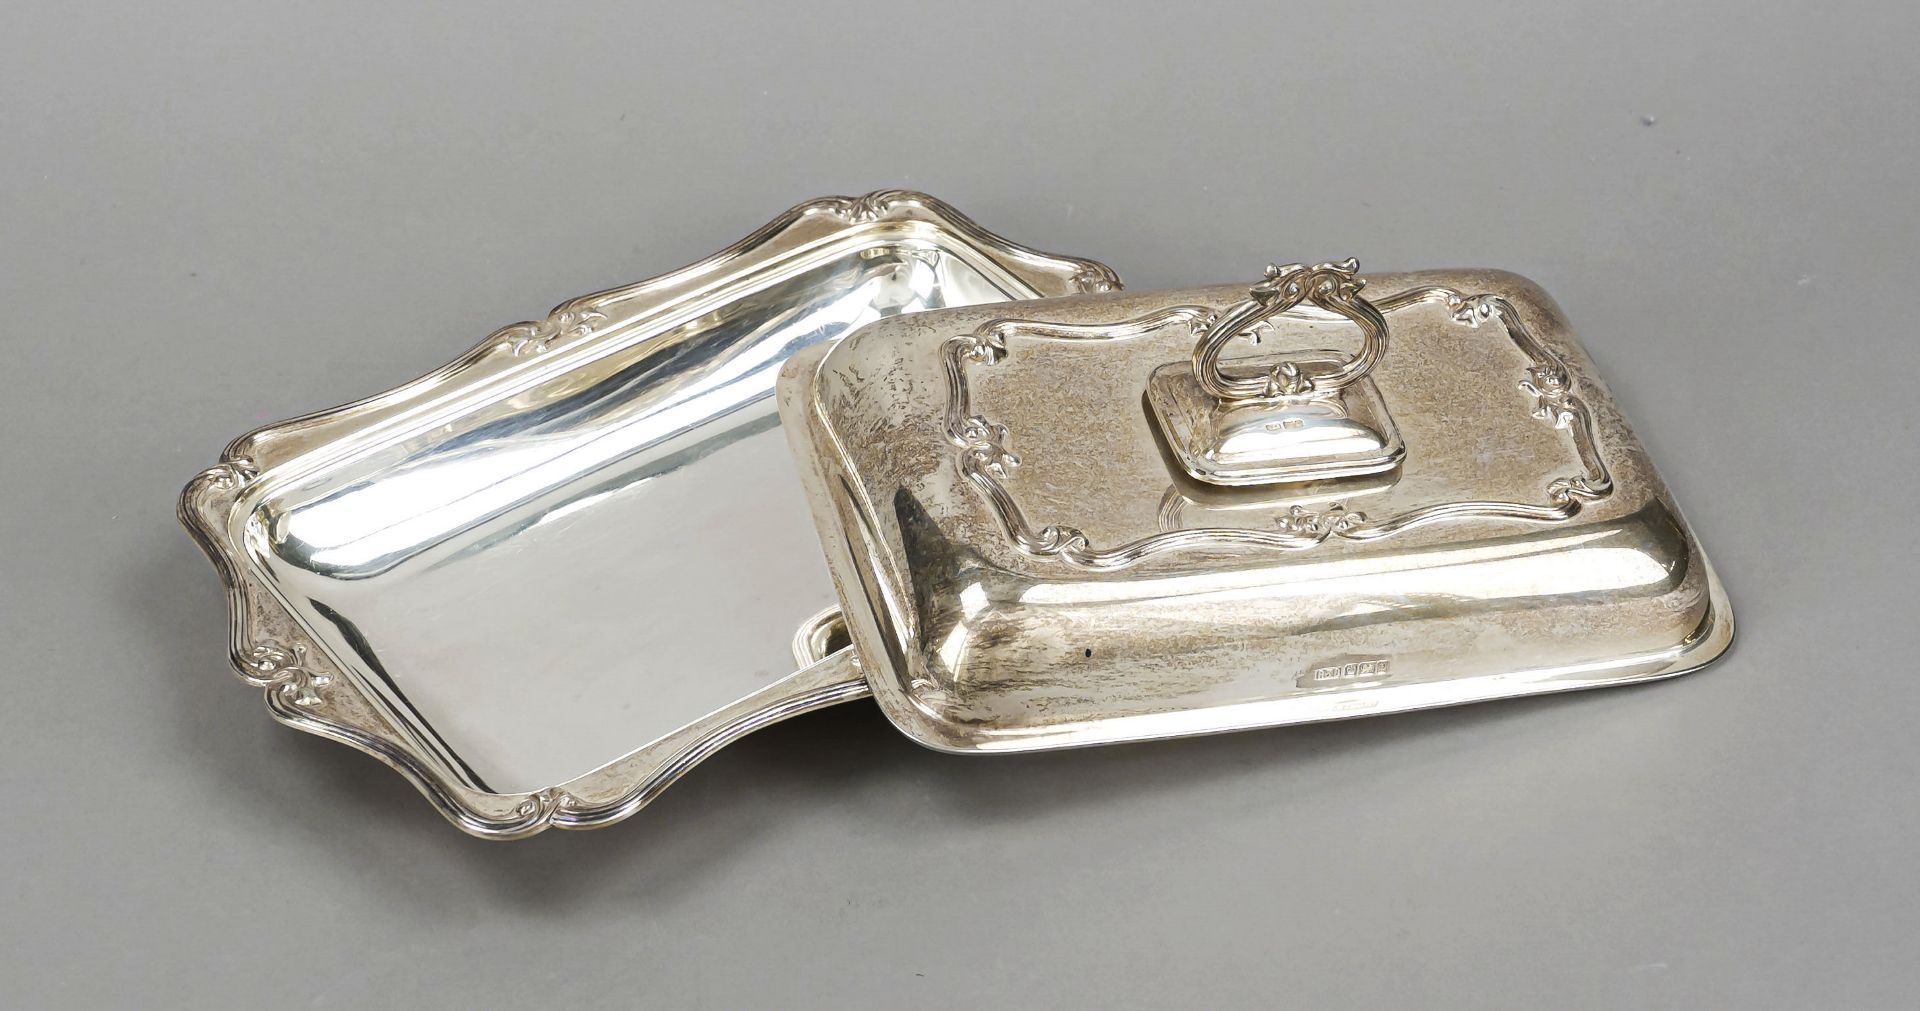 Rectangular warming bowl, England, 1907, maker's mark Roberts & Belk, Sheffield, sterling silver - Image 2 of 2